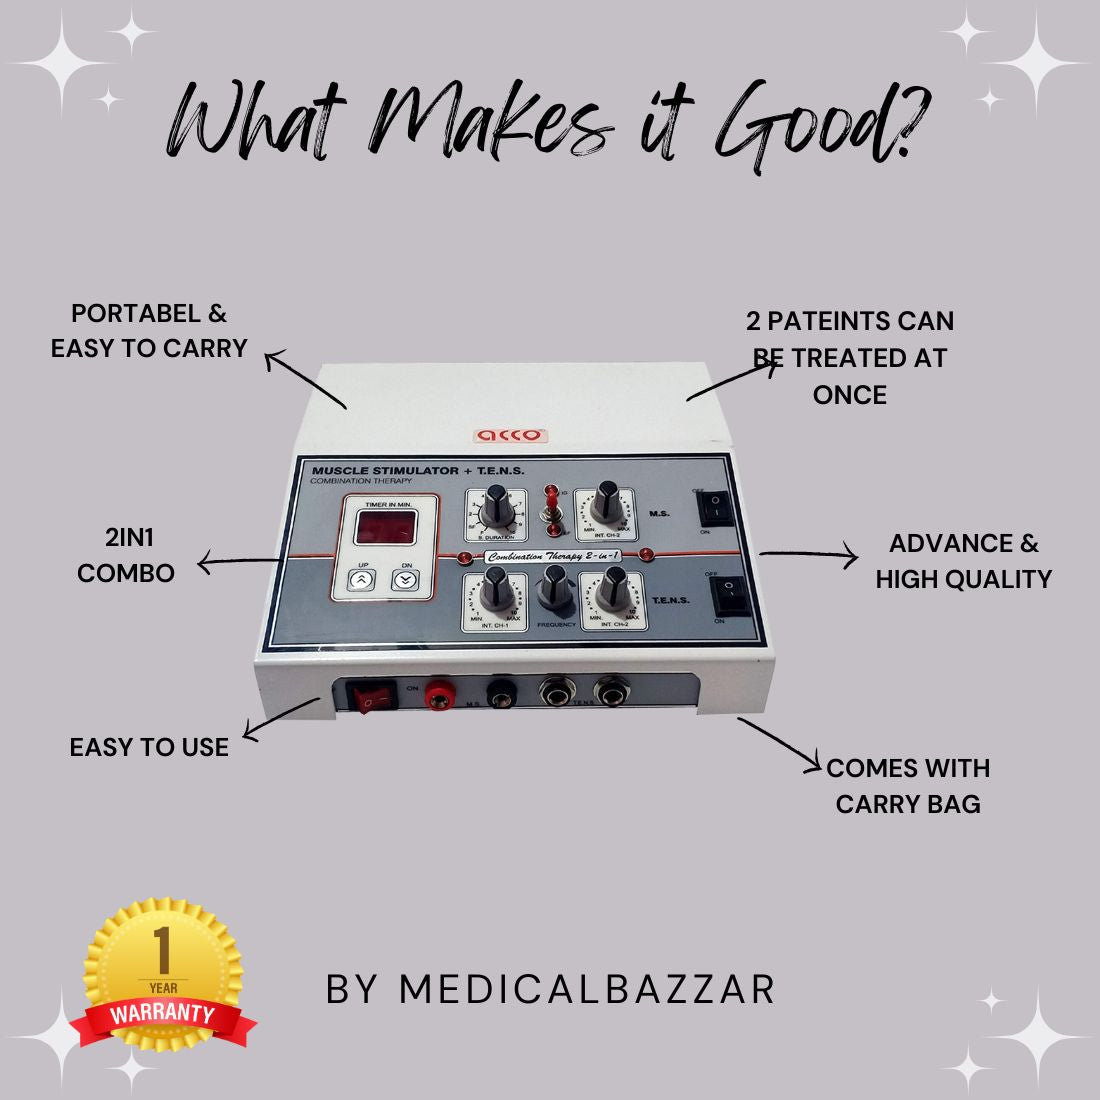 acco Mini Tens Machine 2ch – MedicalBazzar